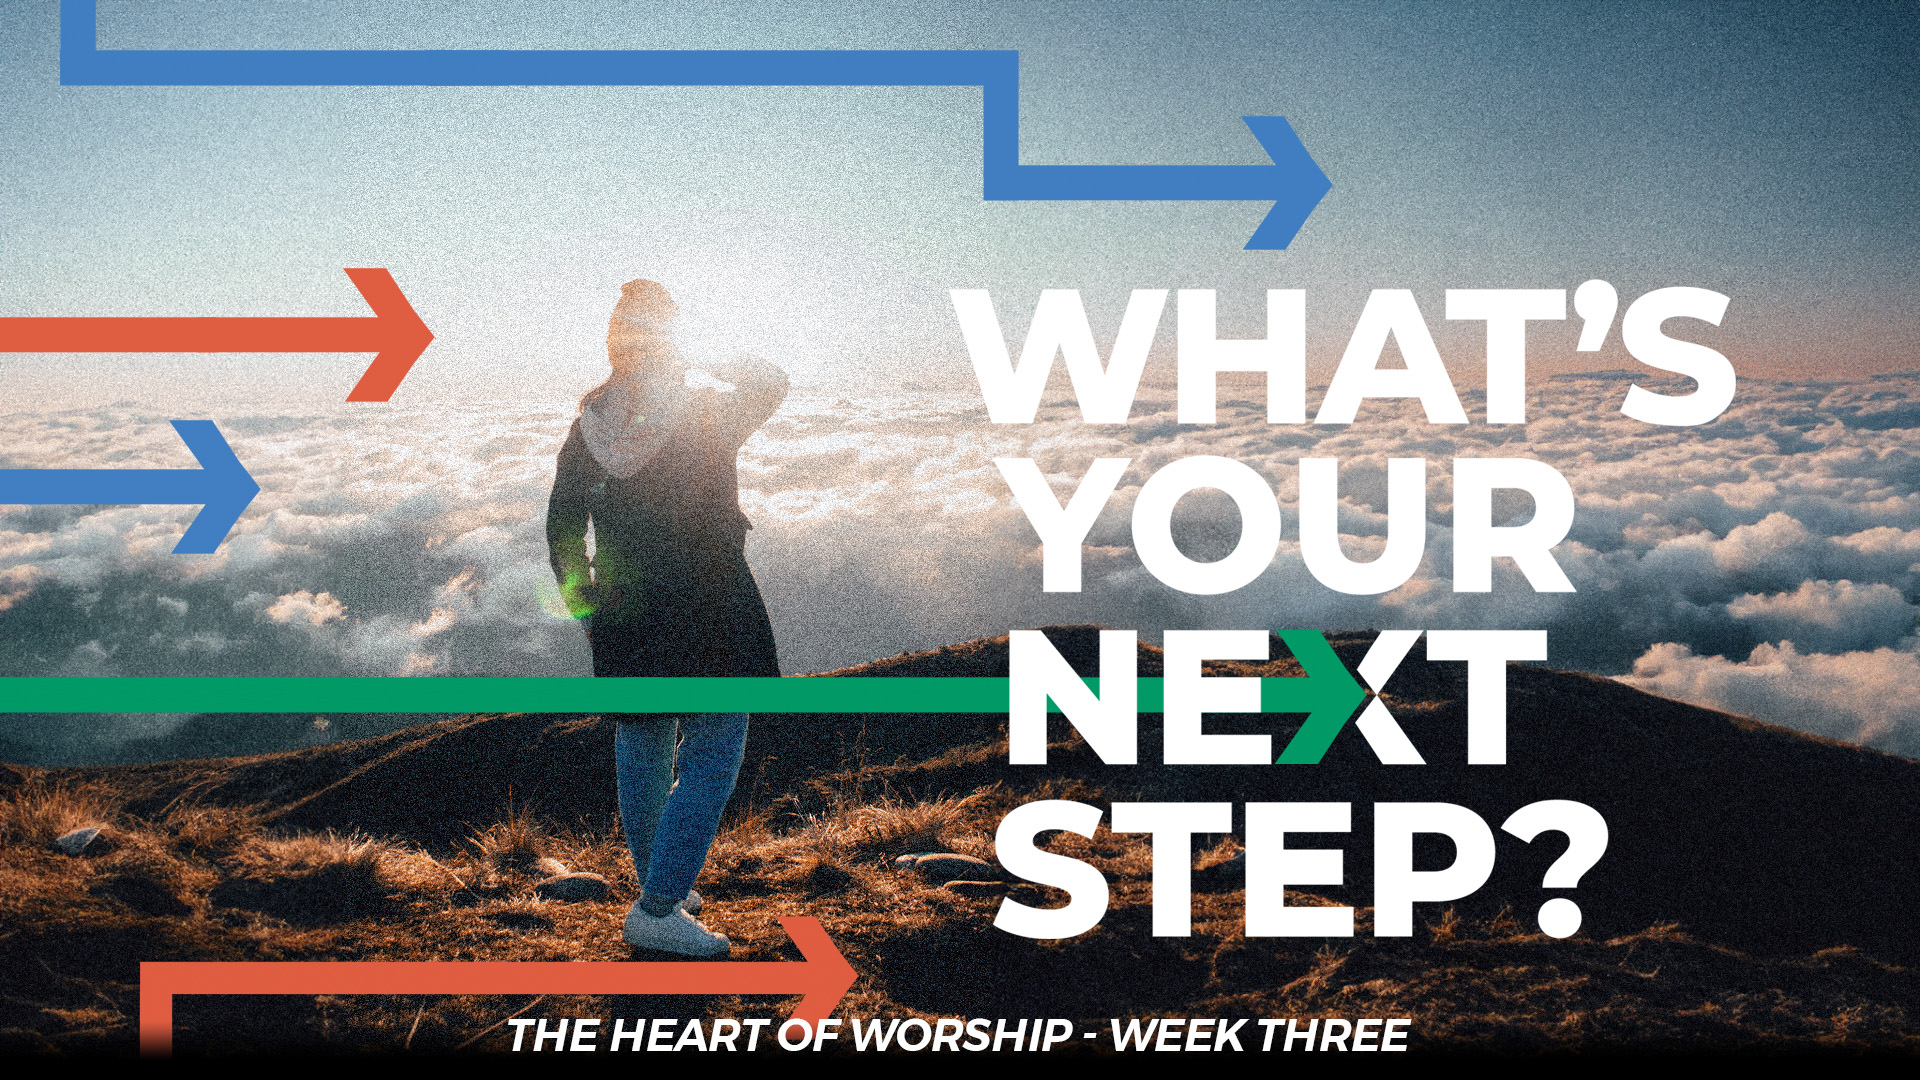 The Heart of Worship - Week Three